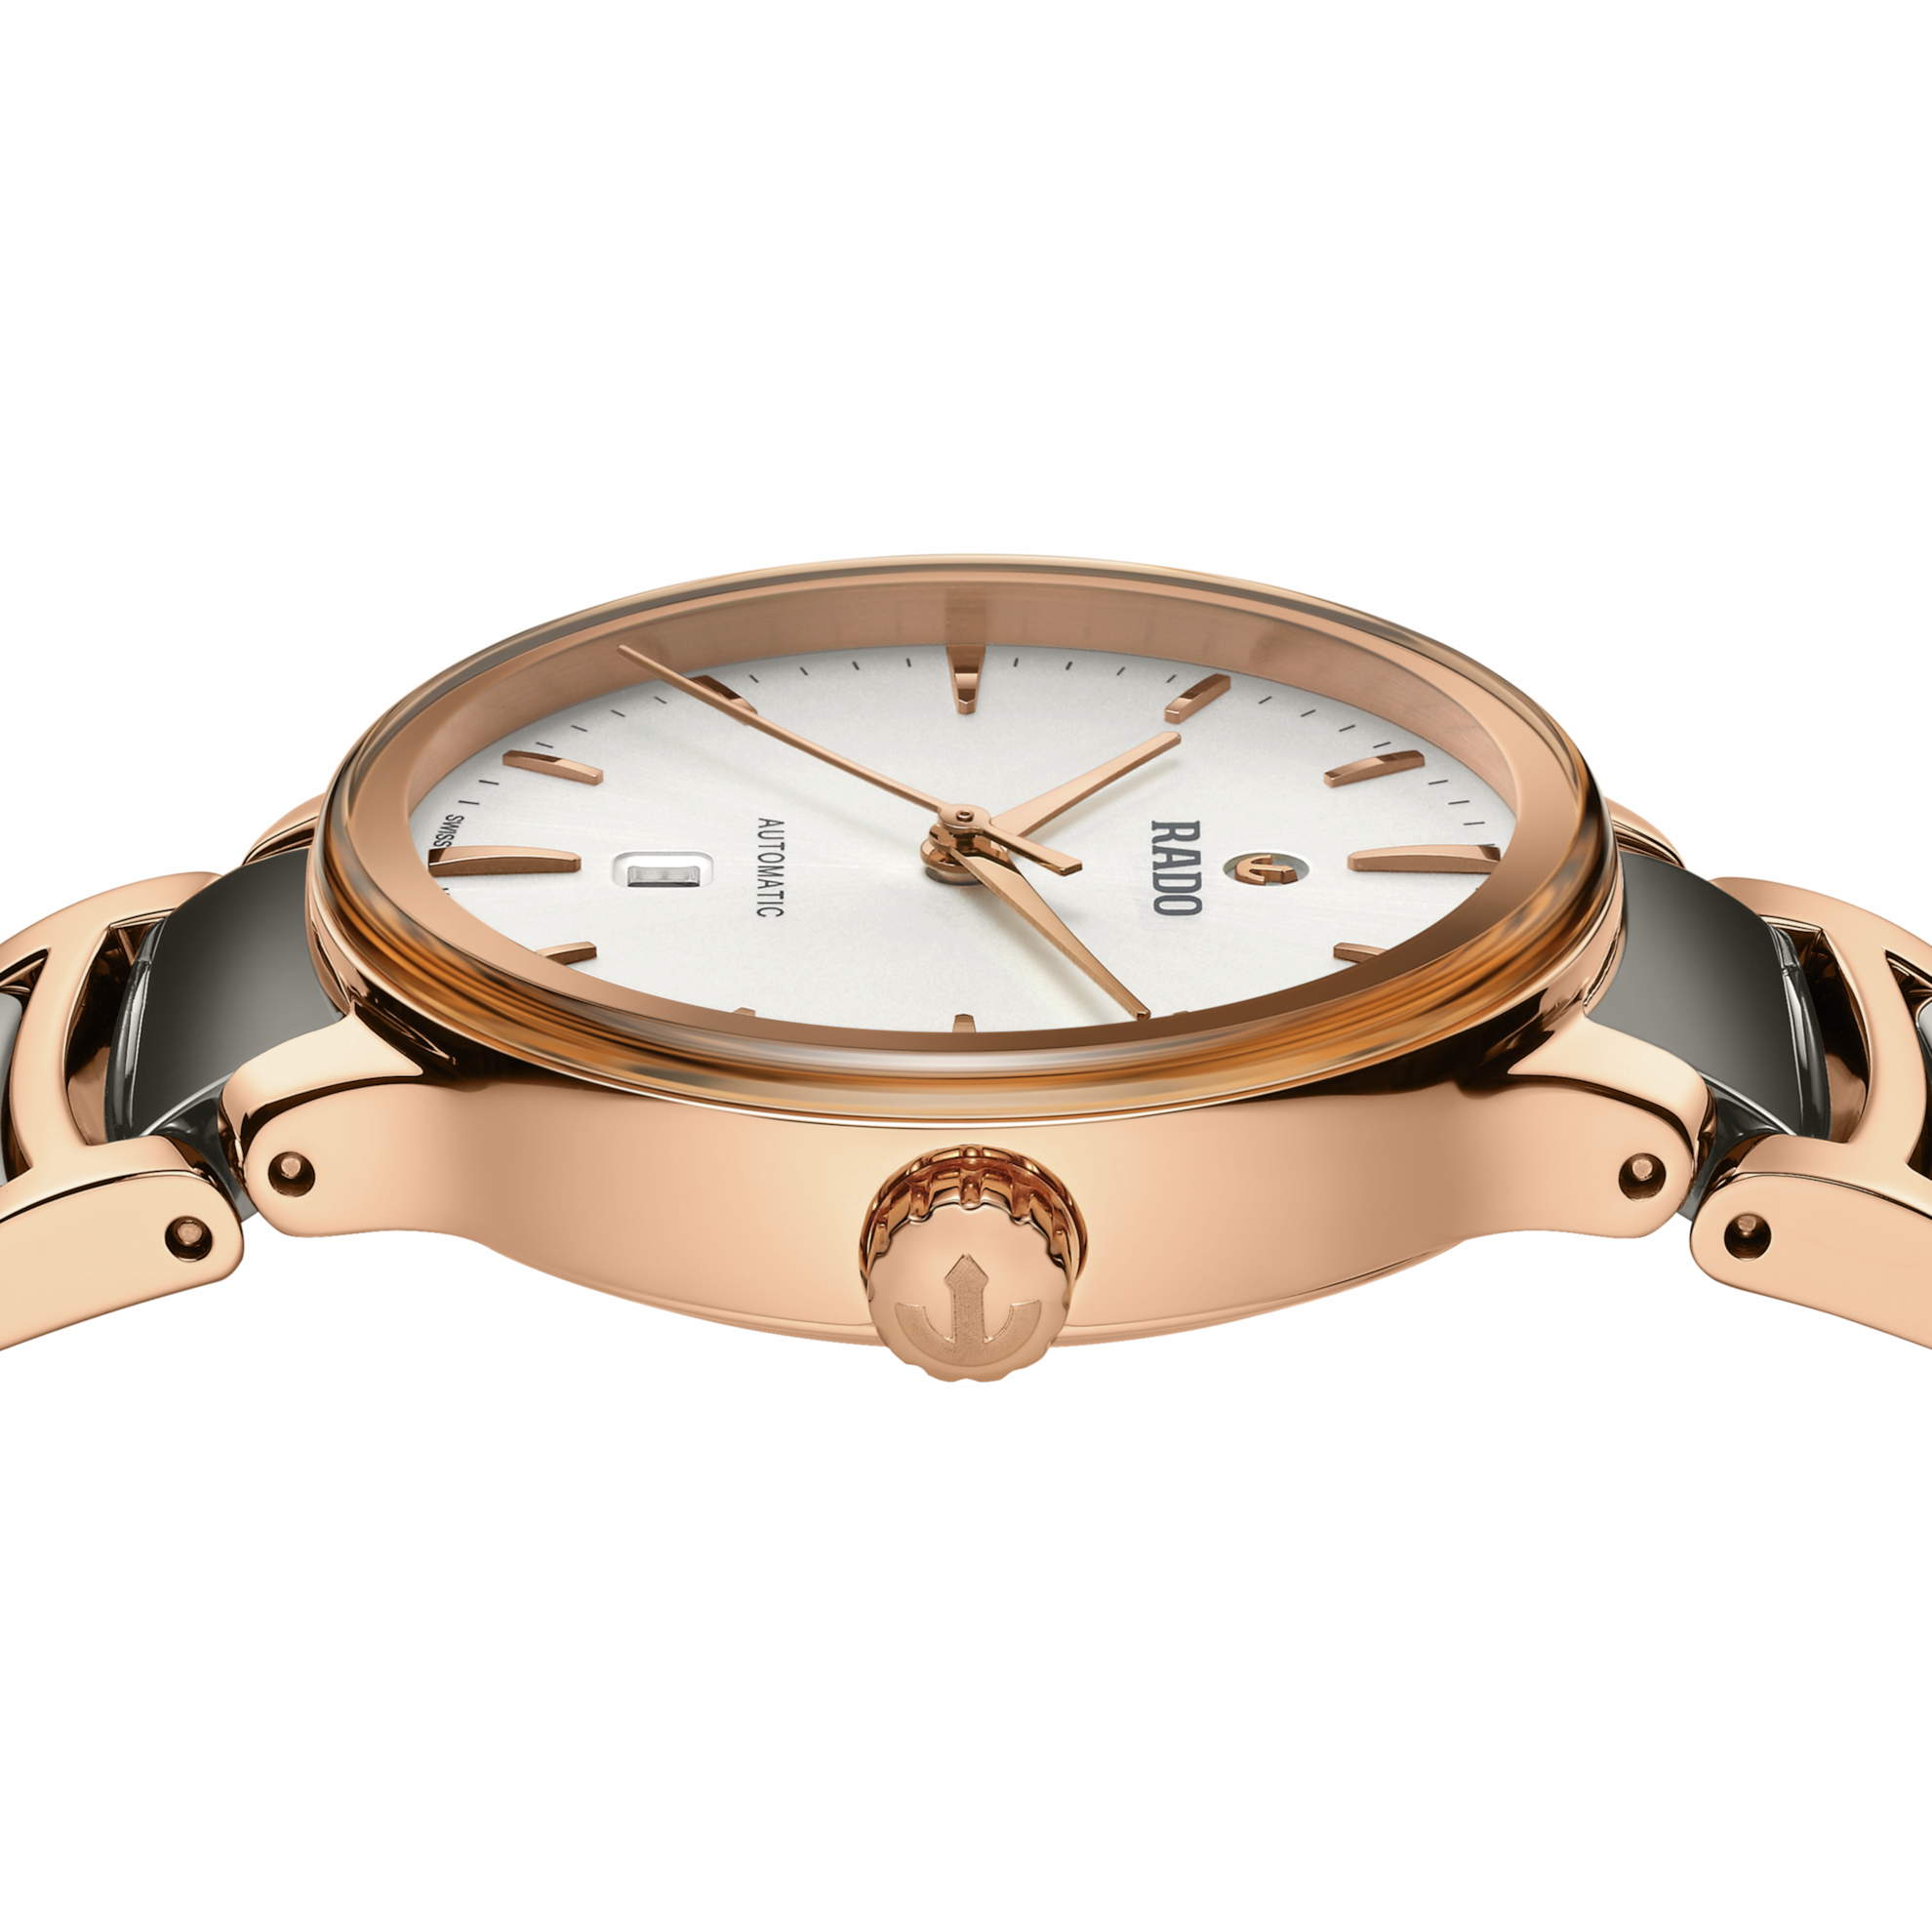 Centrix Automatic R30019012 - Kamal Watch Company